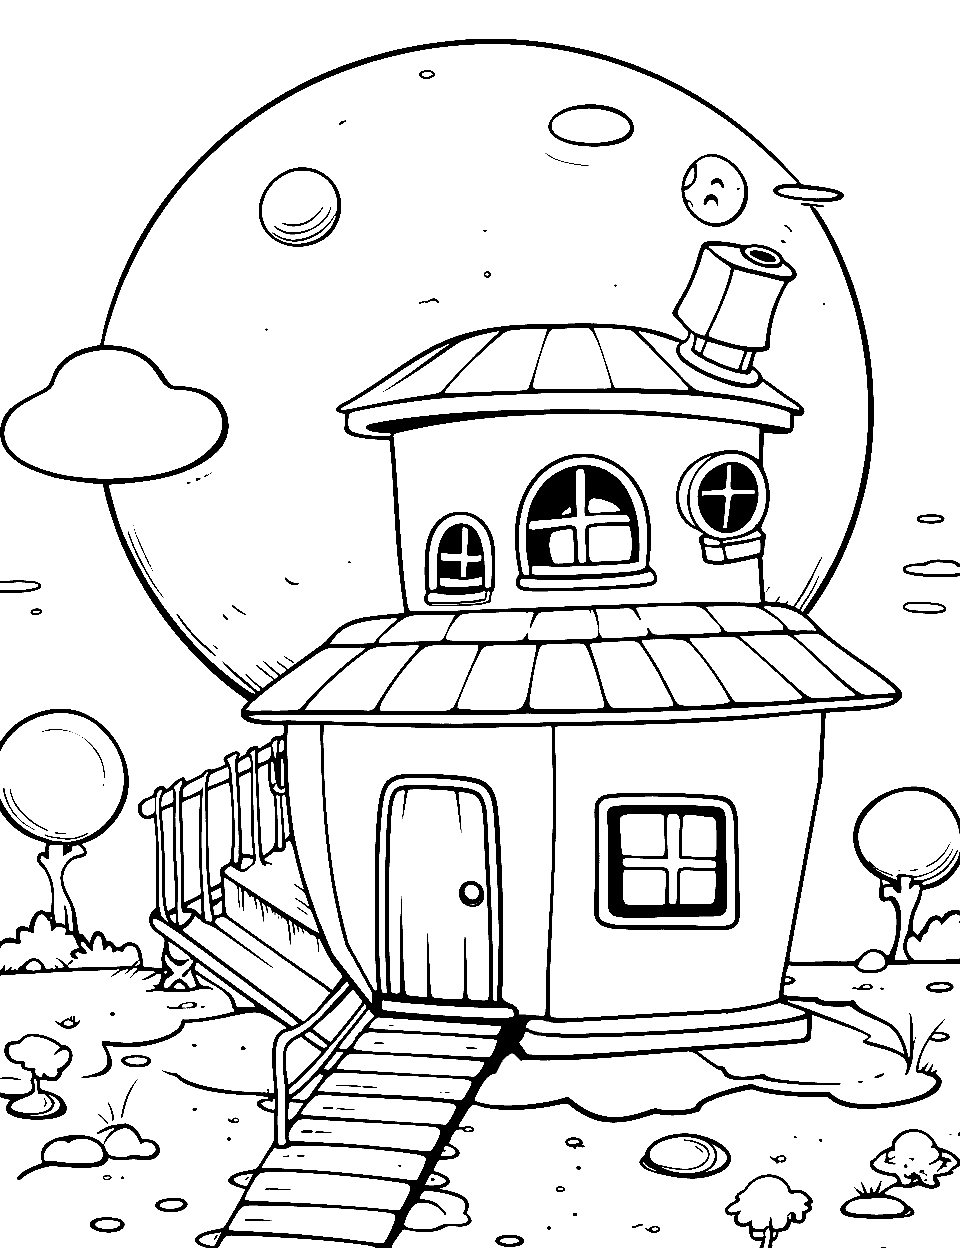 Futuristic Space Habitat Coloring Page - A futuristic house on a distant planet.